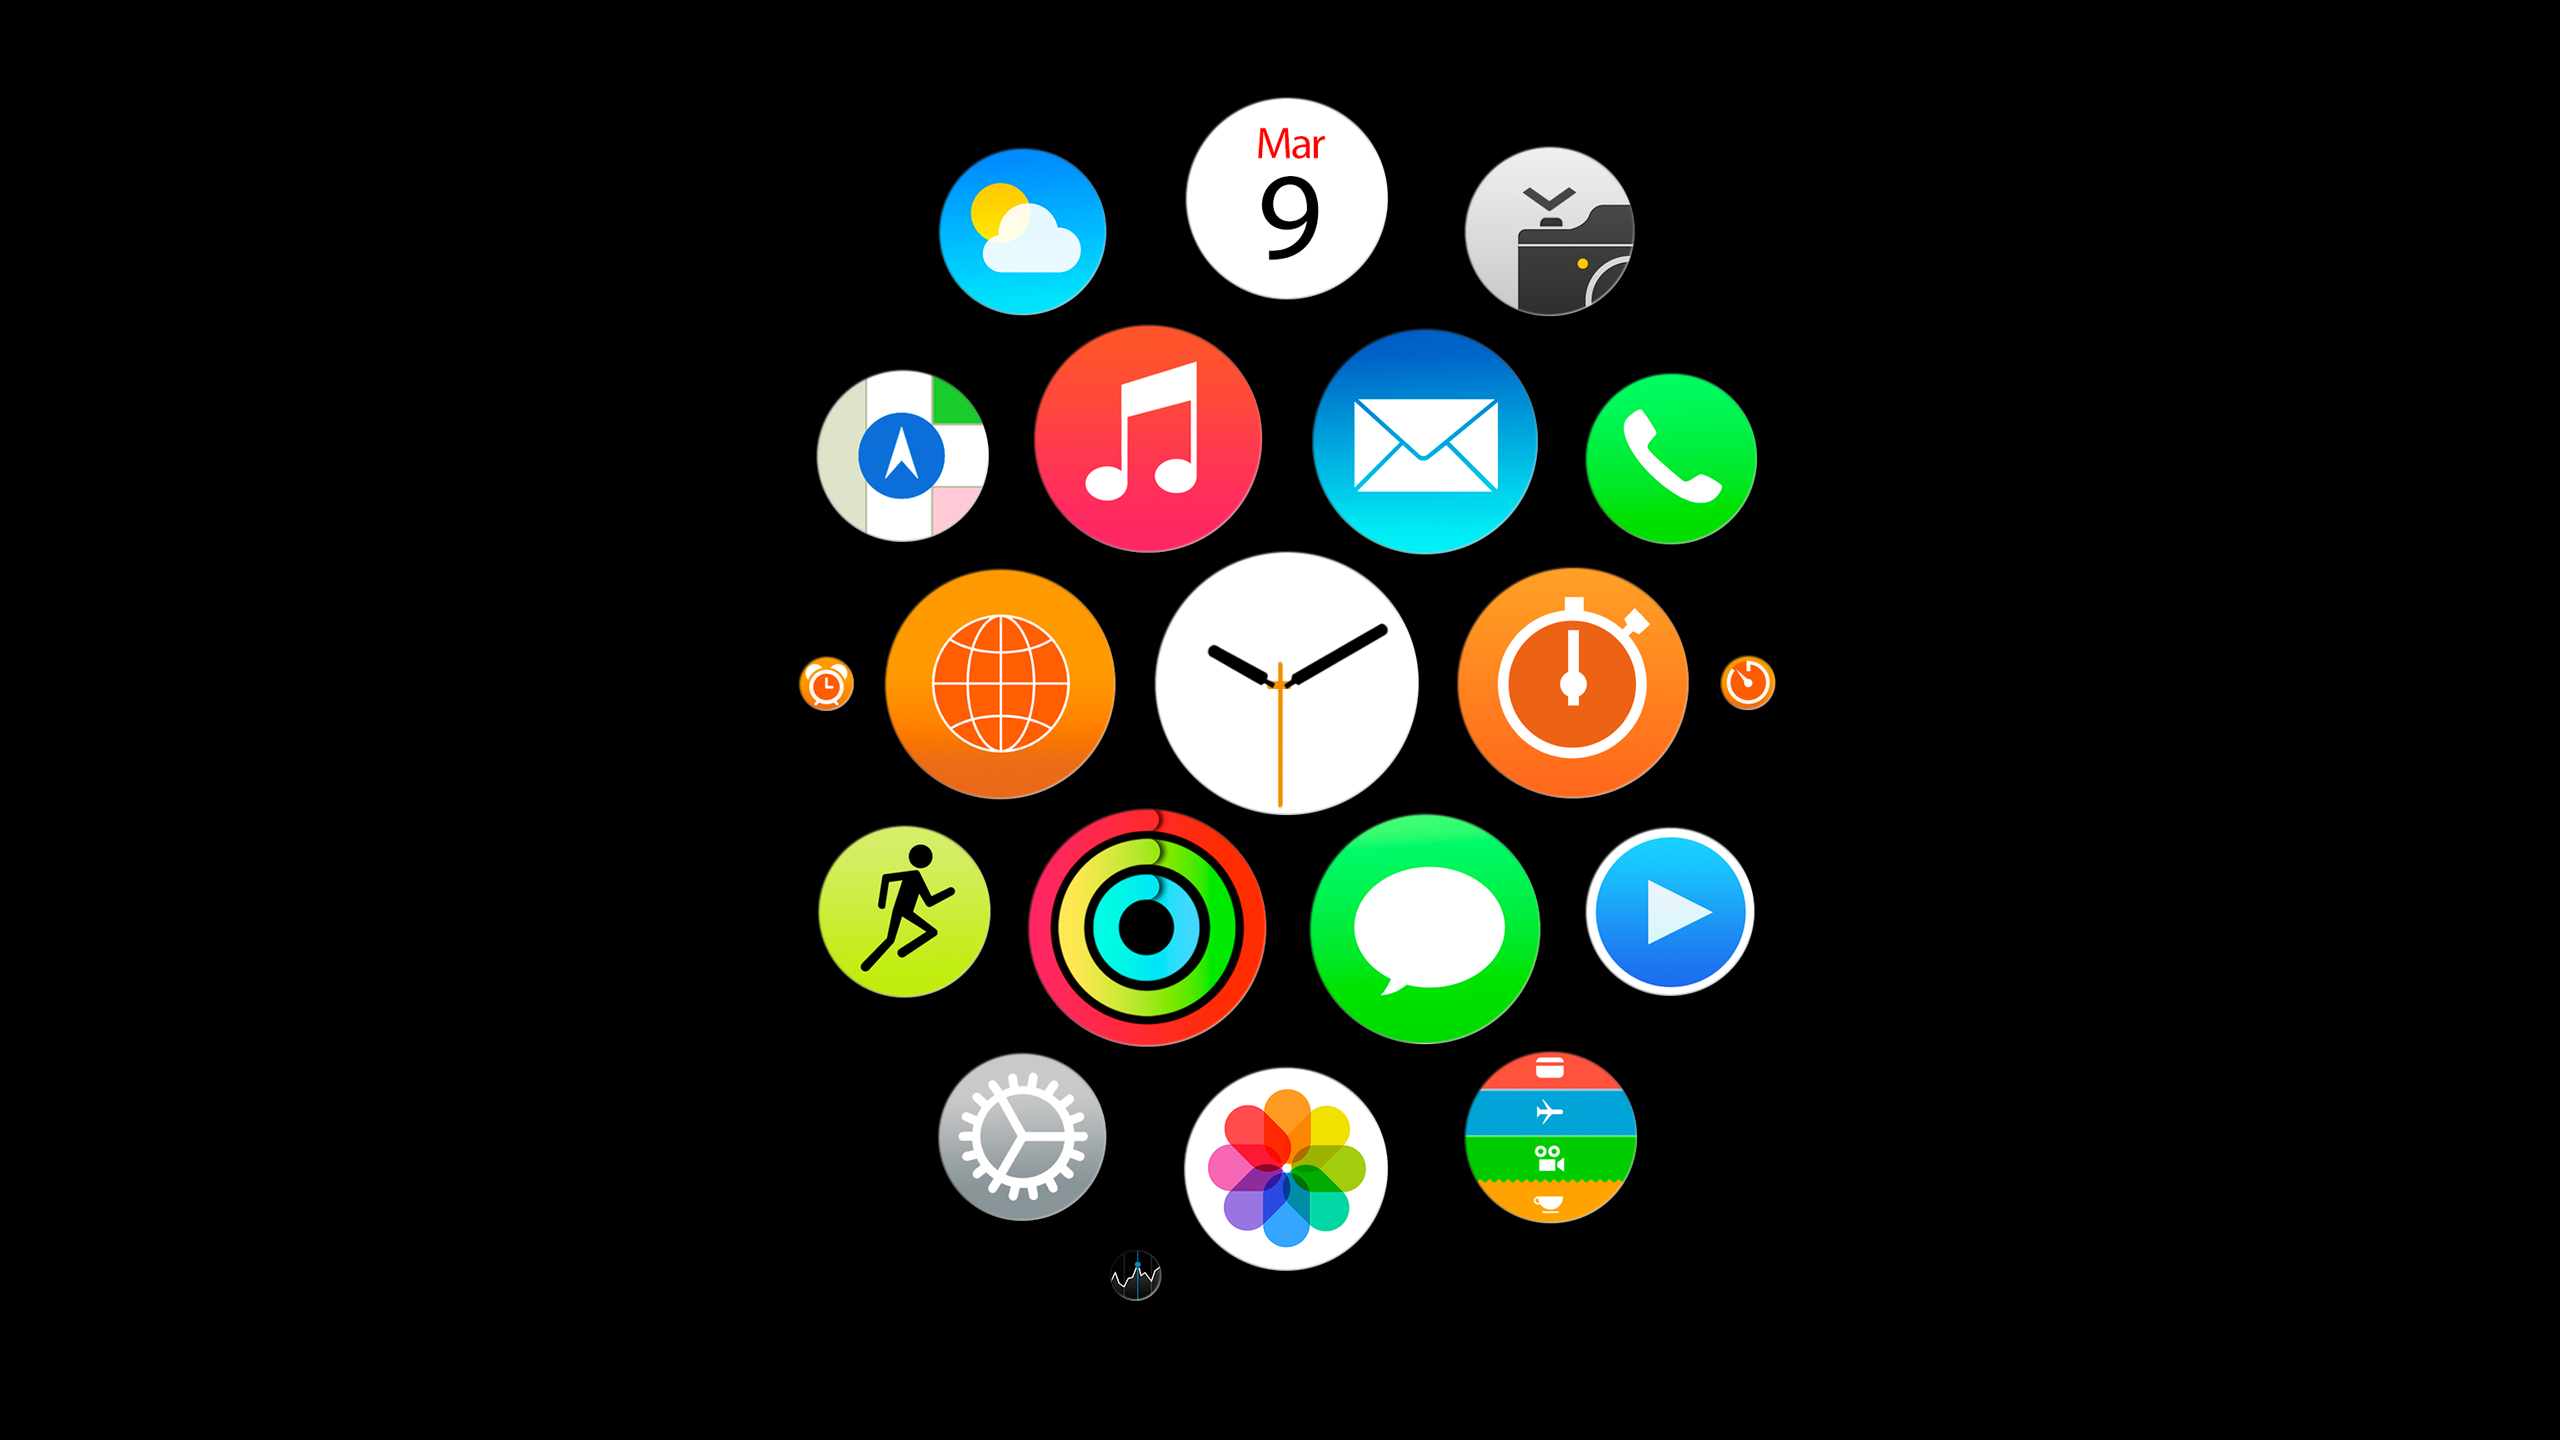 47+] Apple Watch Wallpapers - WallpaperSafari